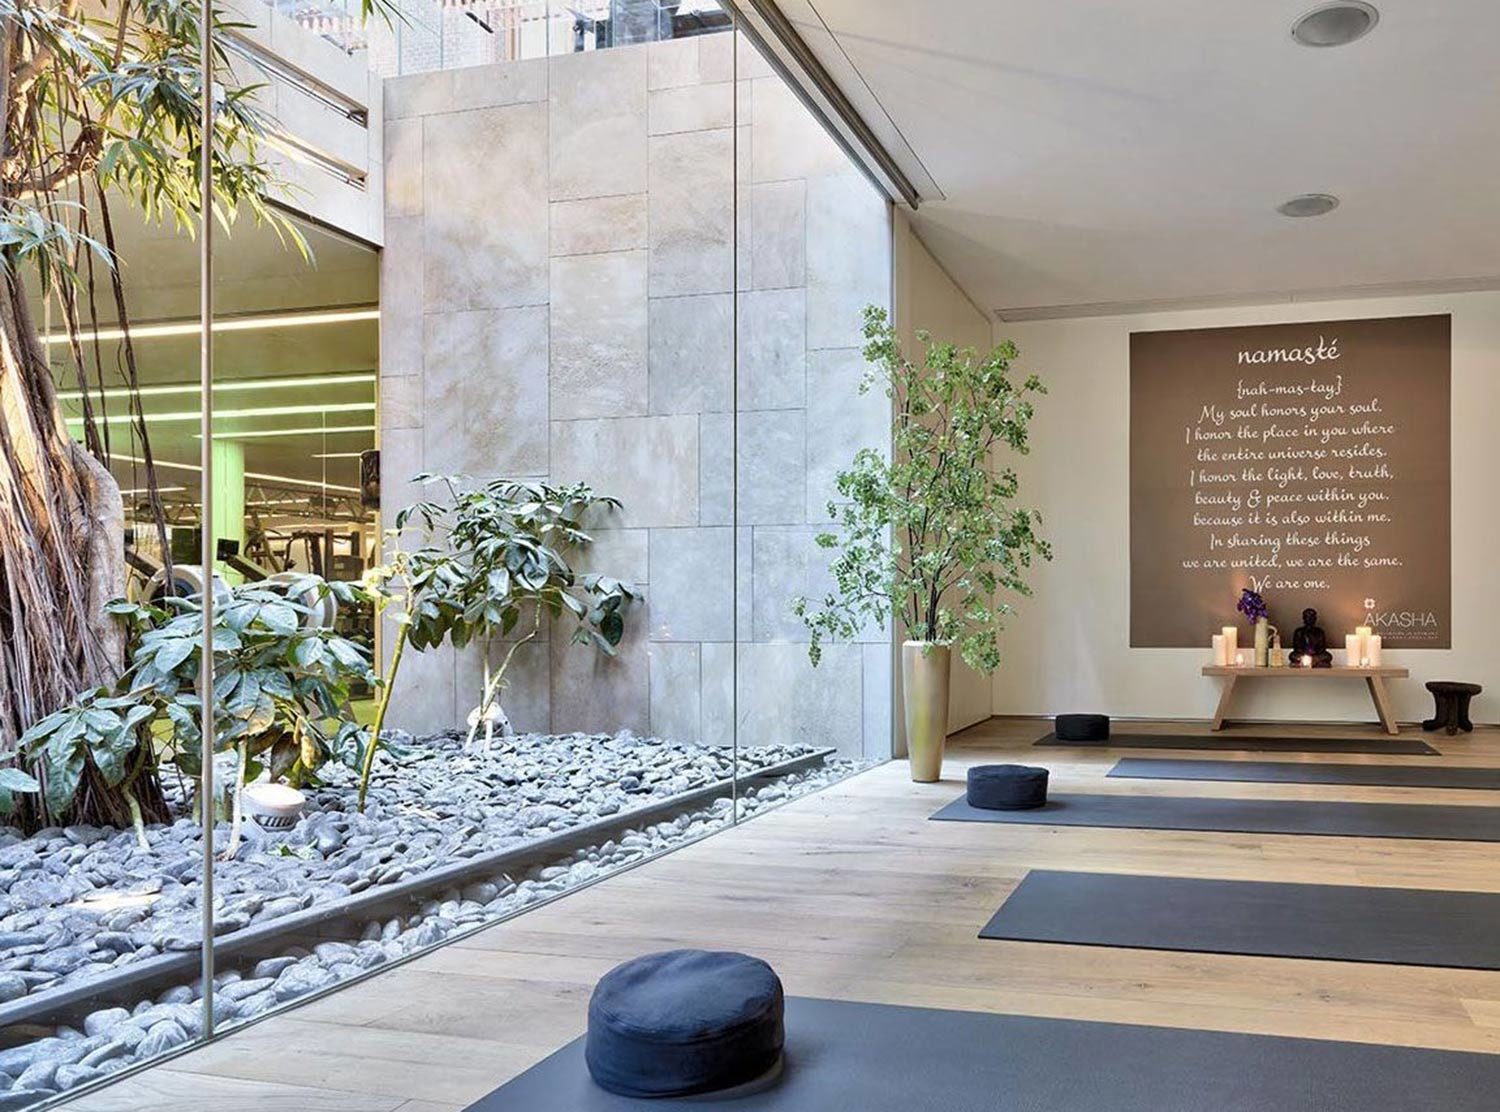 Conservatorium Hotel The hotel boosts an impressive spa and yoga studio